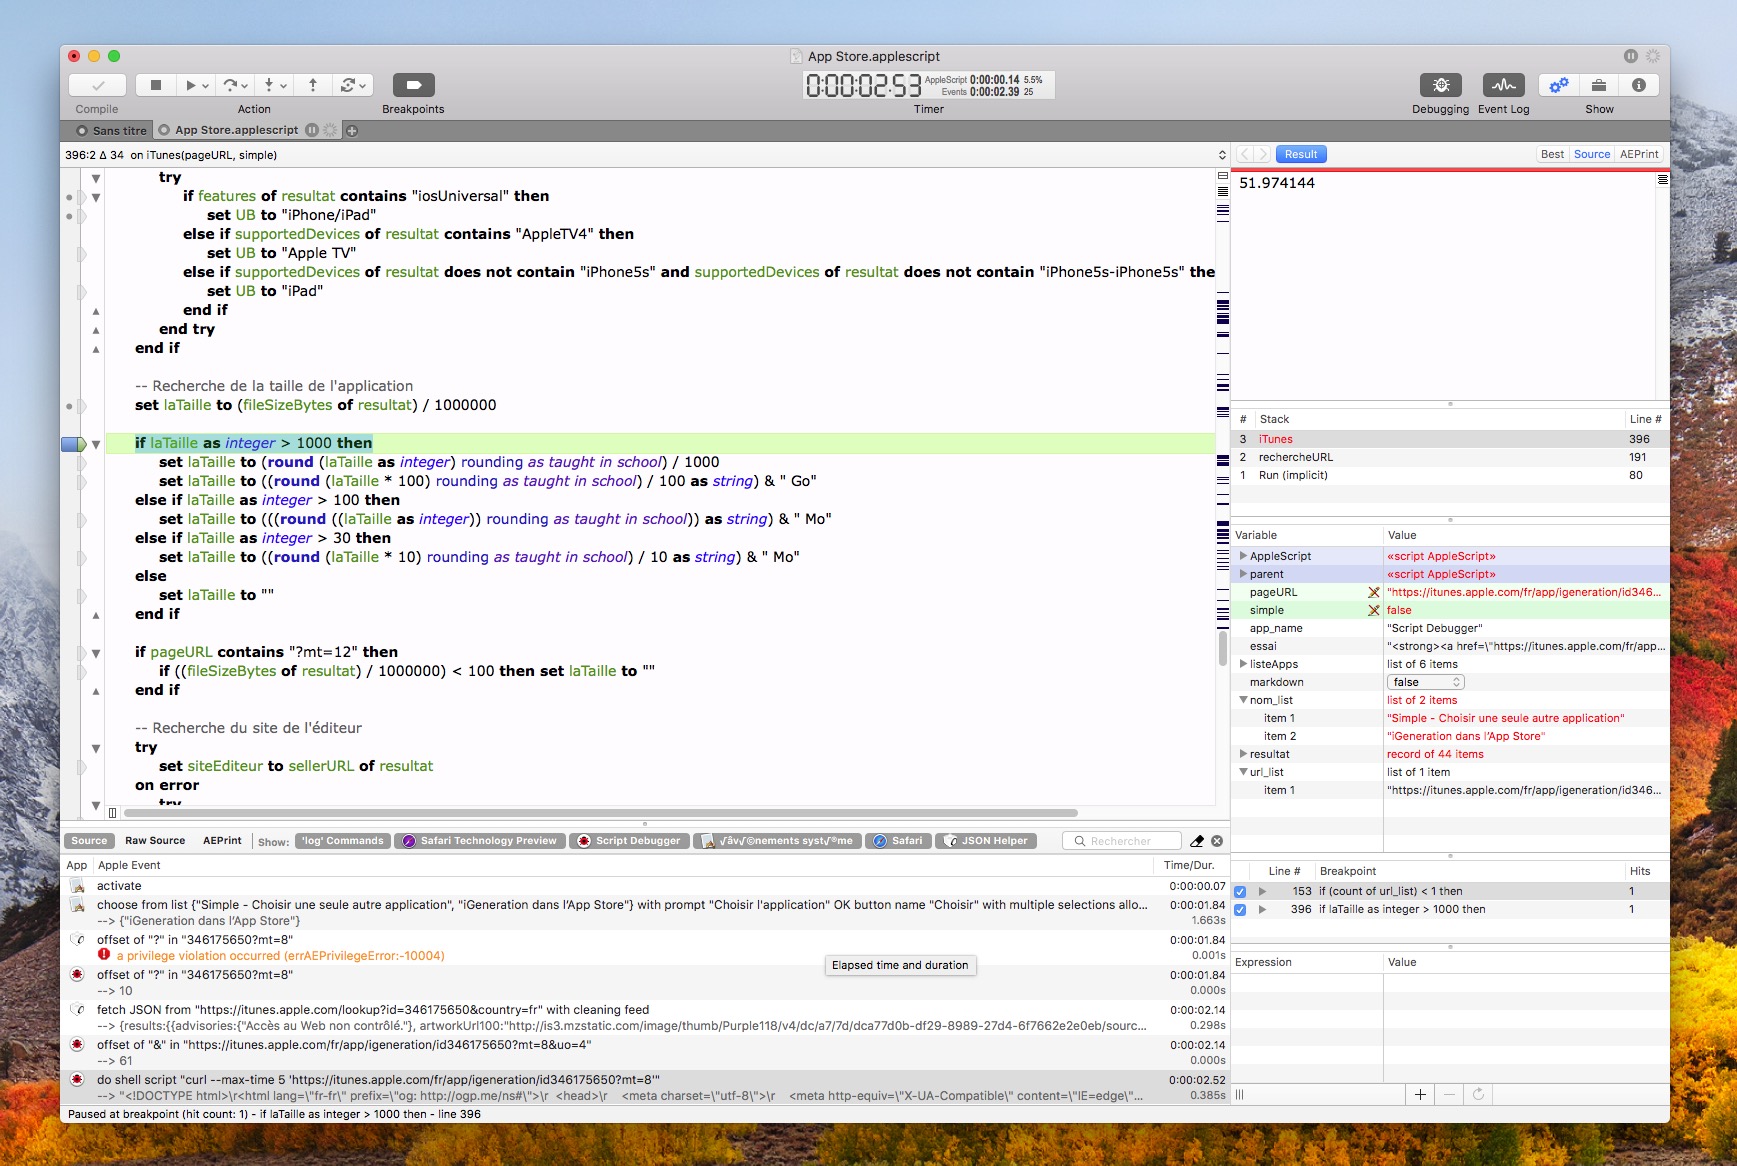 script debugger windows 7